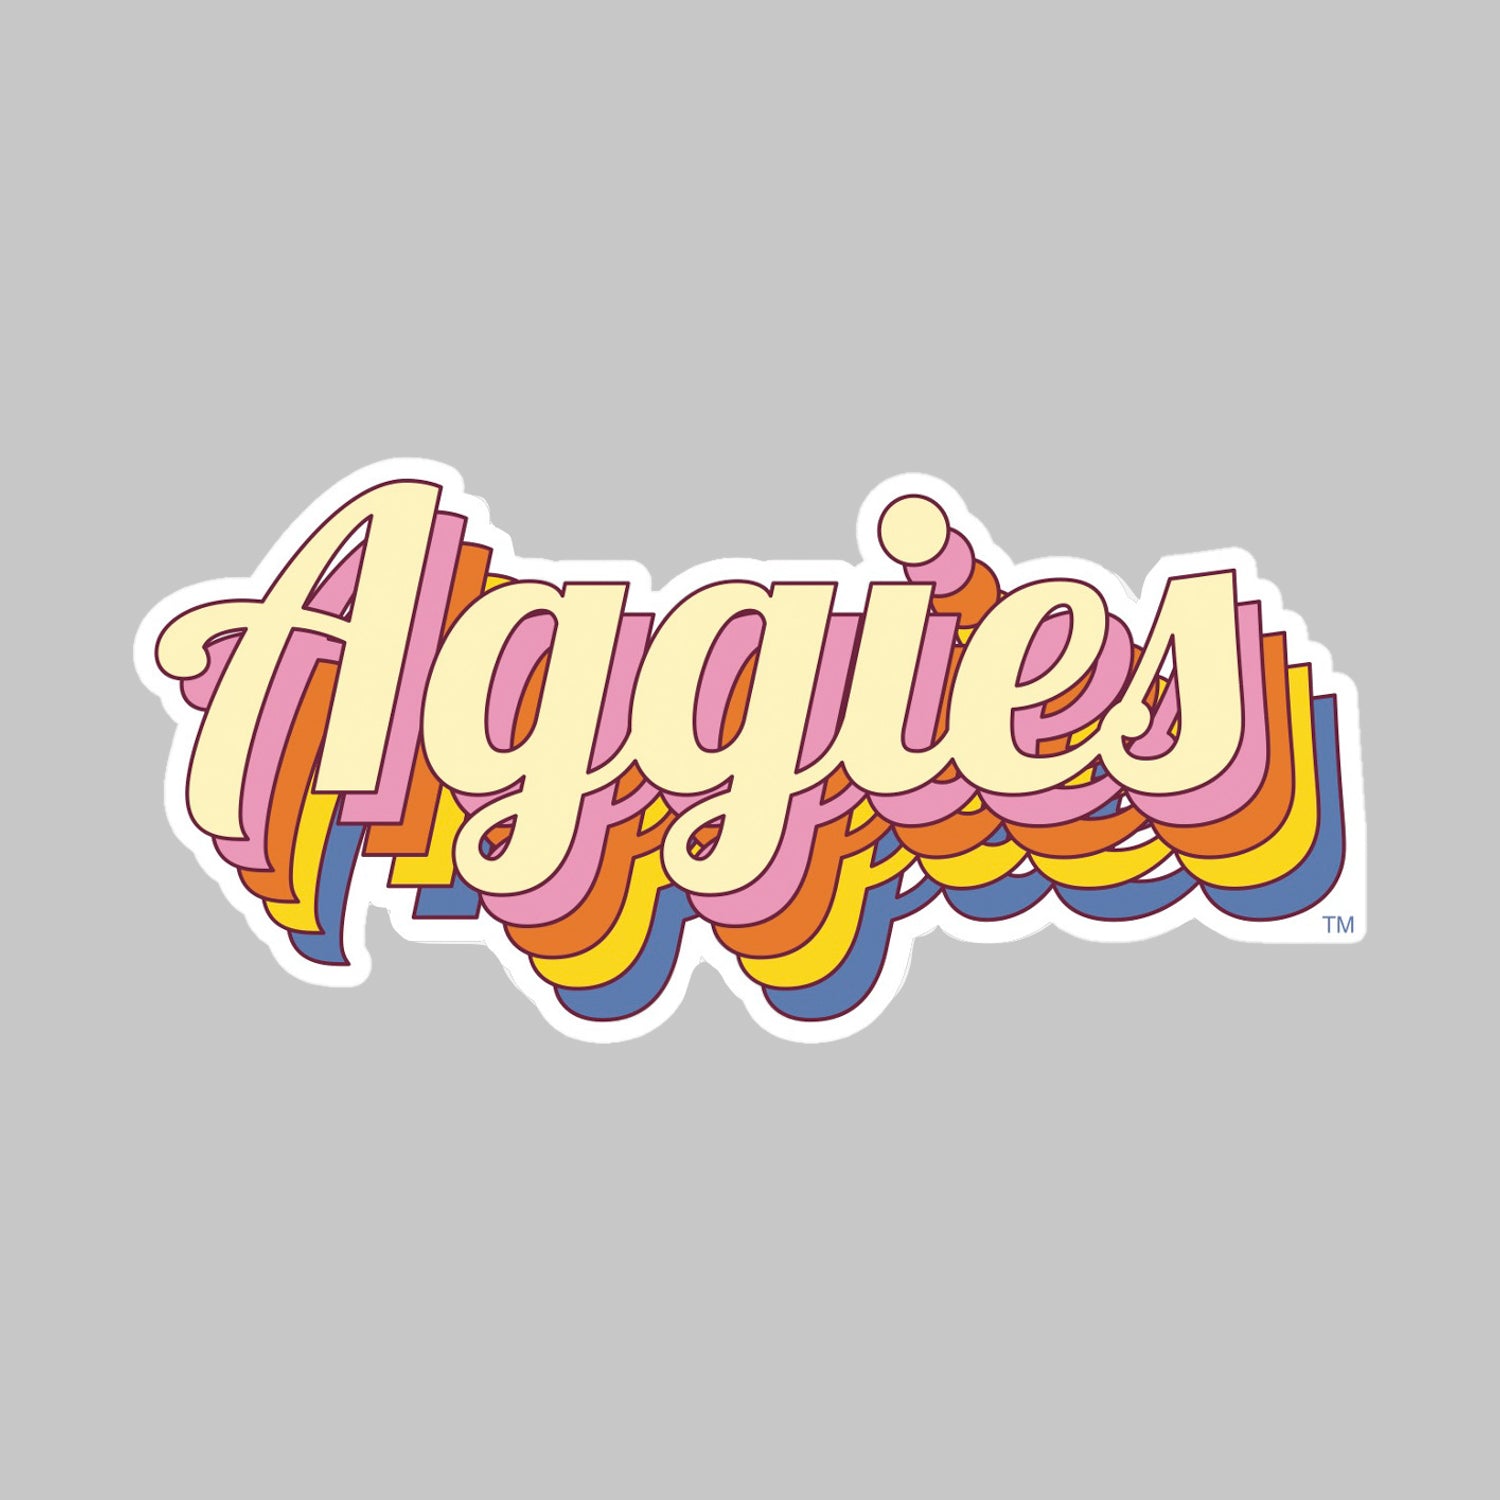 Texas A&M Cursive Layered Aggies Dizzler Sticker